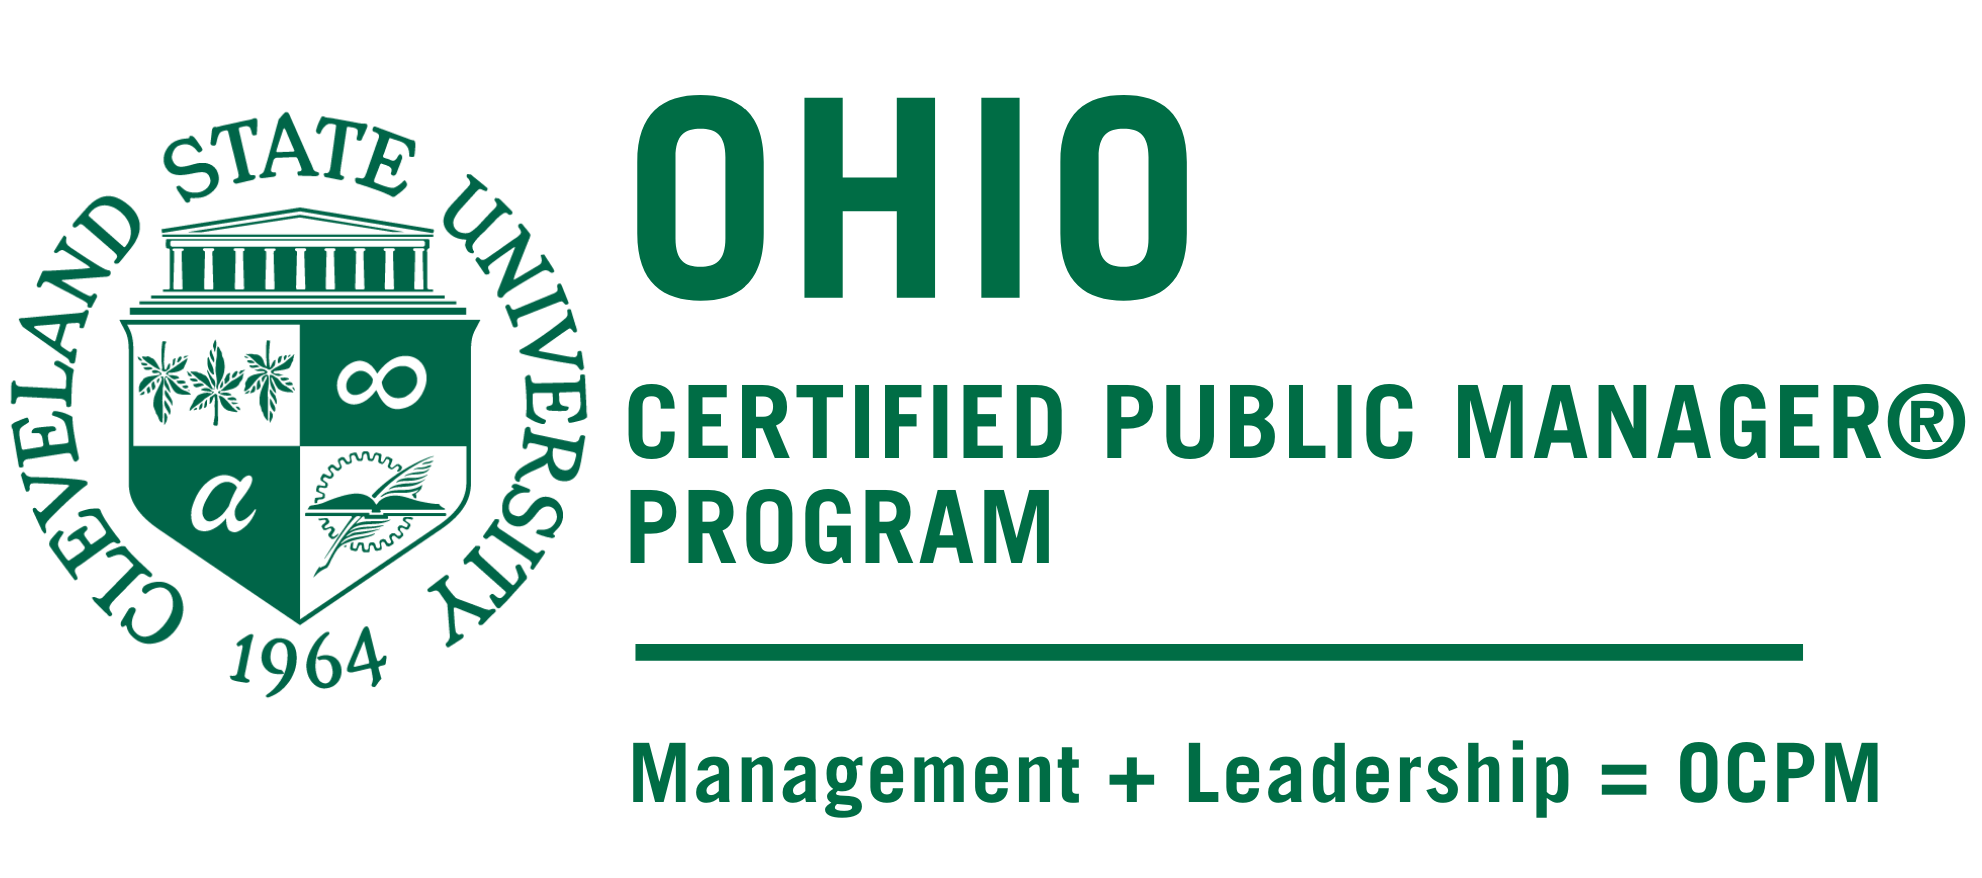  Ohio Certified Public Manager® Program 